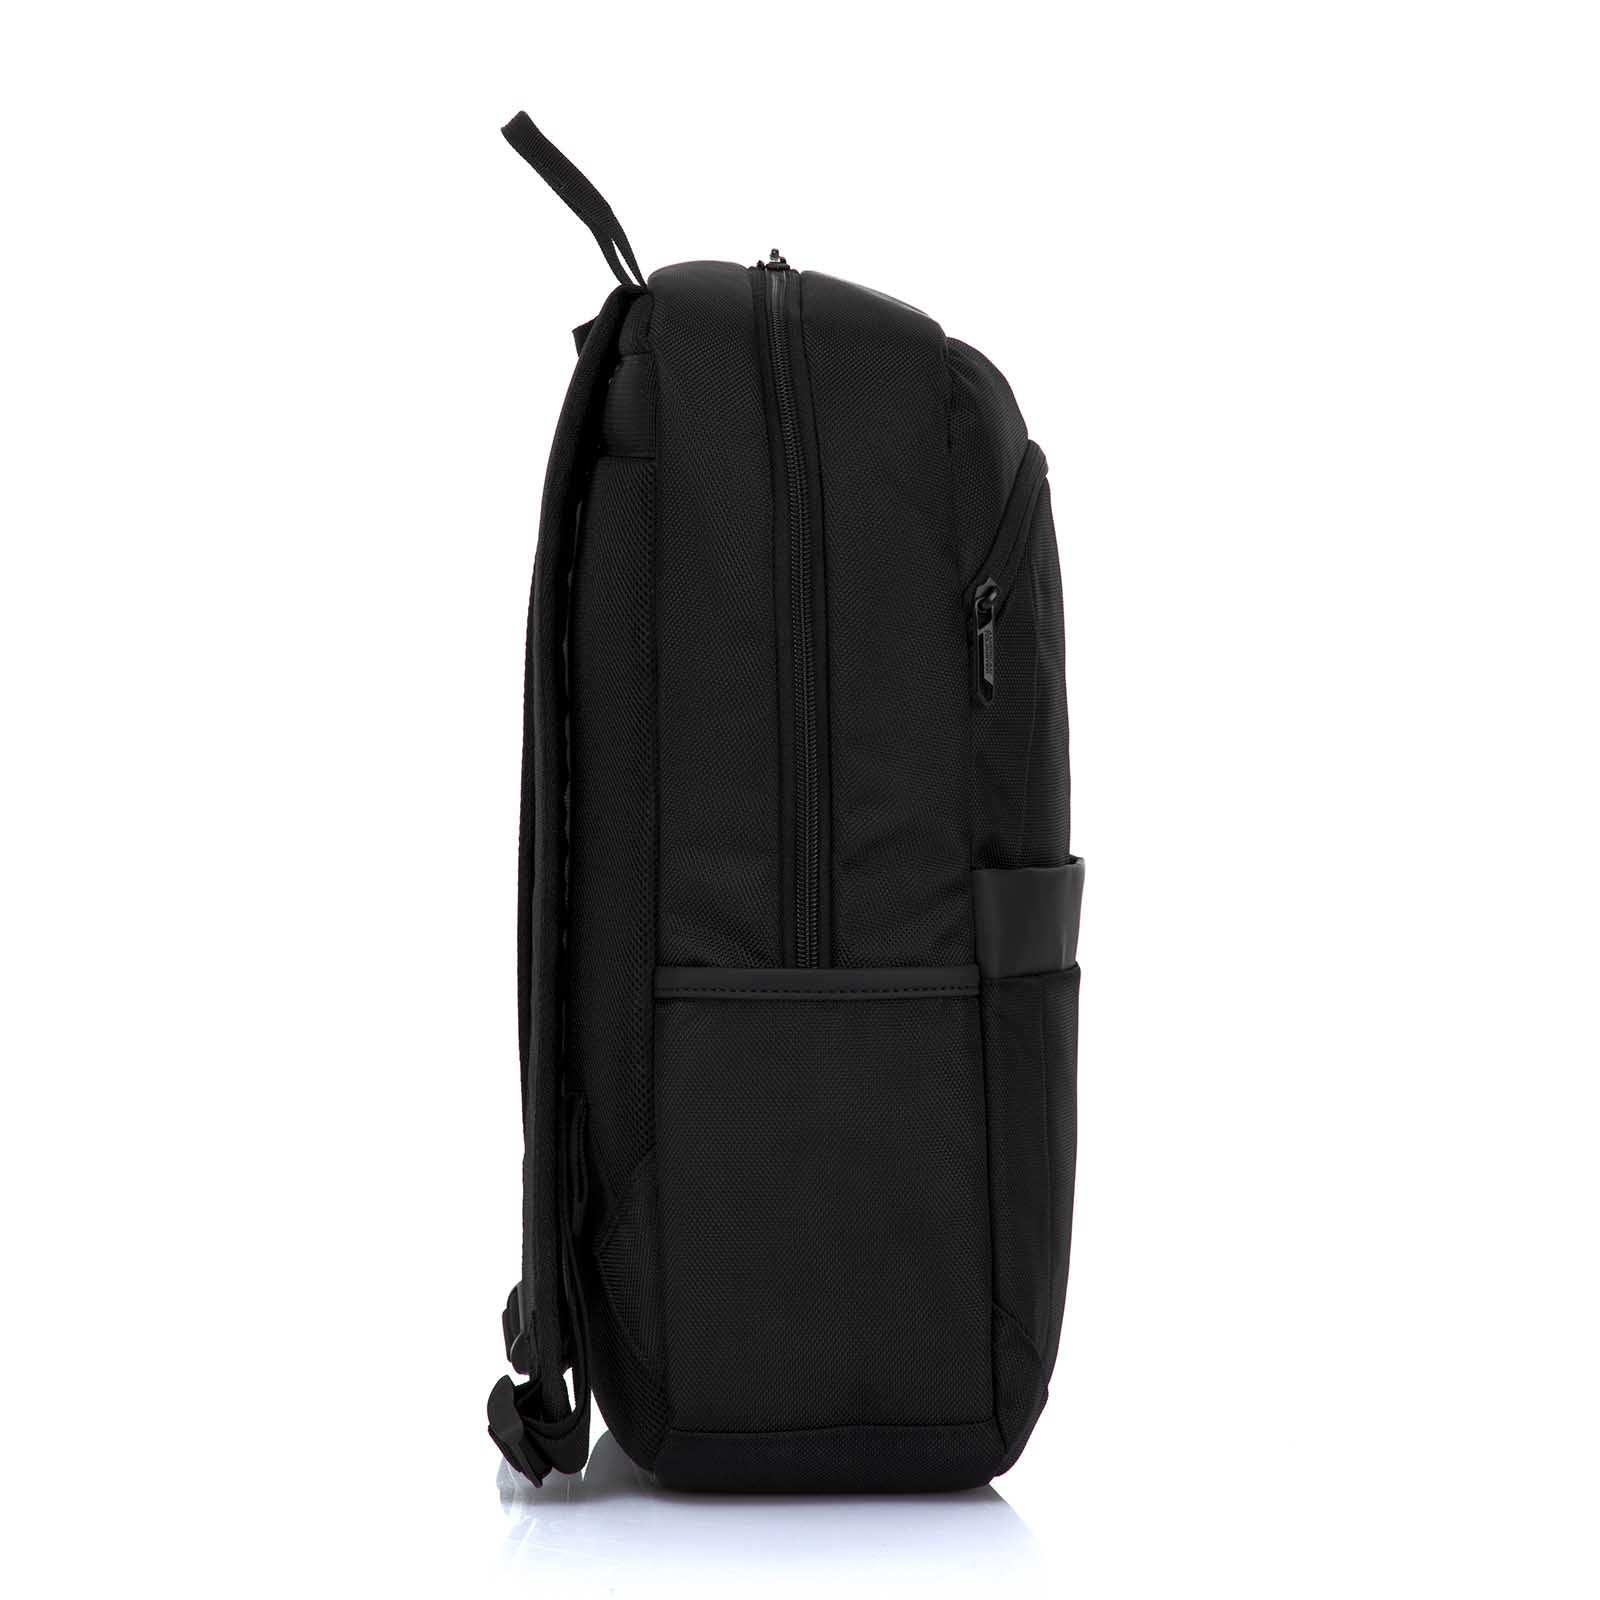 American-Tourister-Kamden-15-Inch-Laptop-Backpack-Black-Side-LH